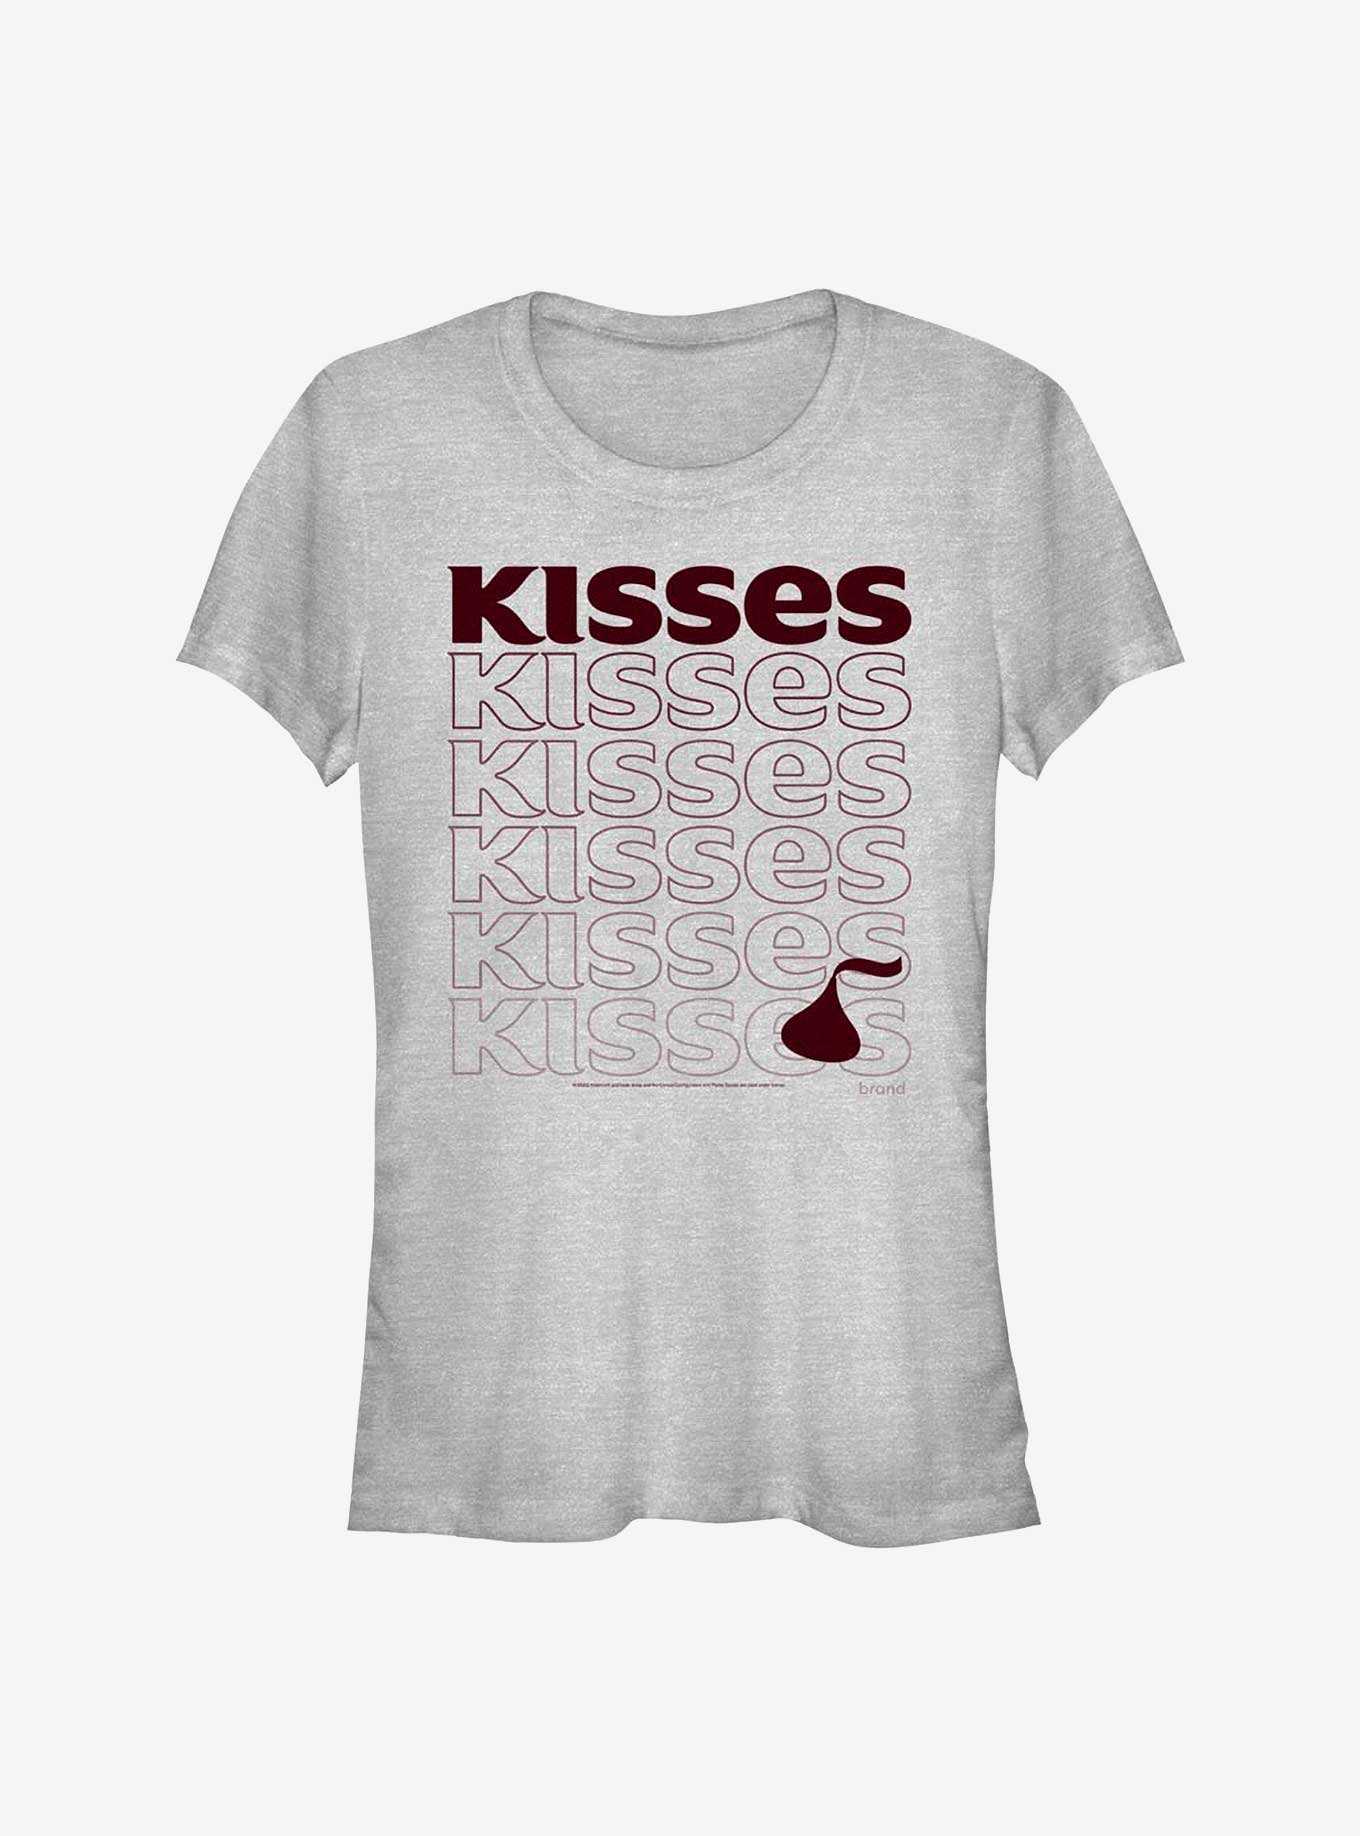 Hershey's Kisses Stacked Kisses Girls T-Shirt, , hi-res